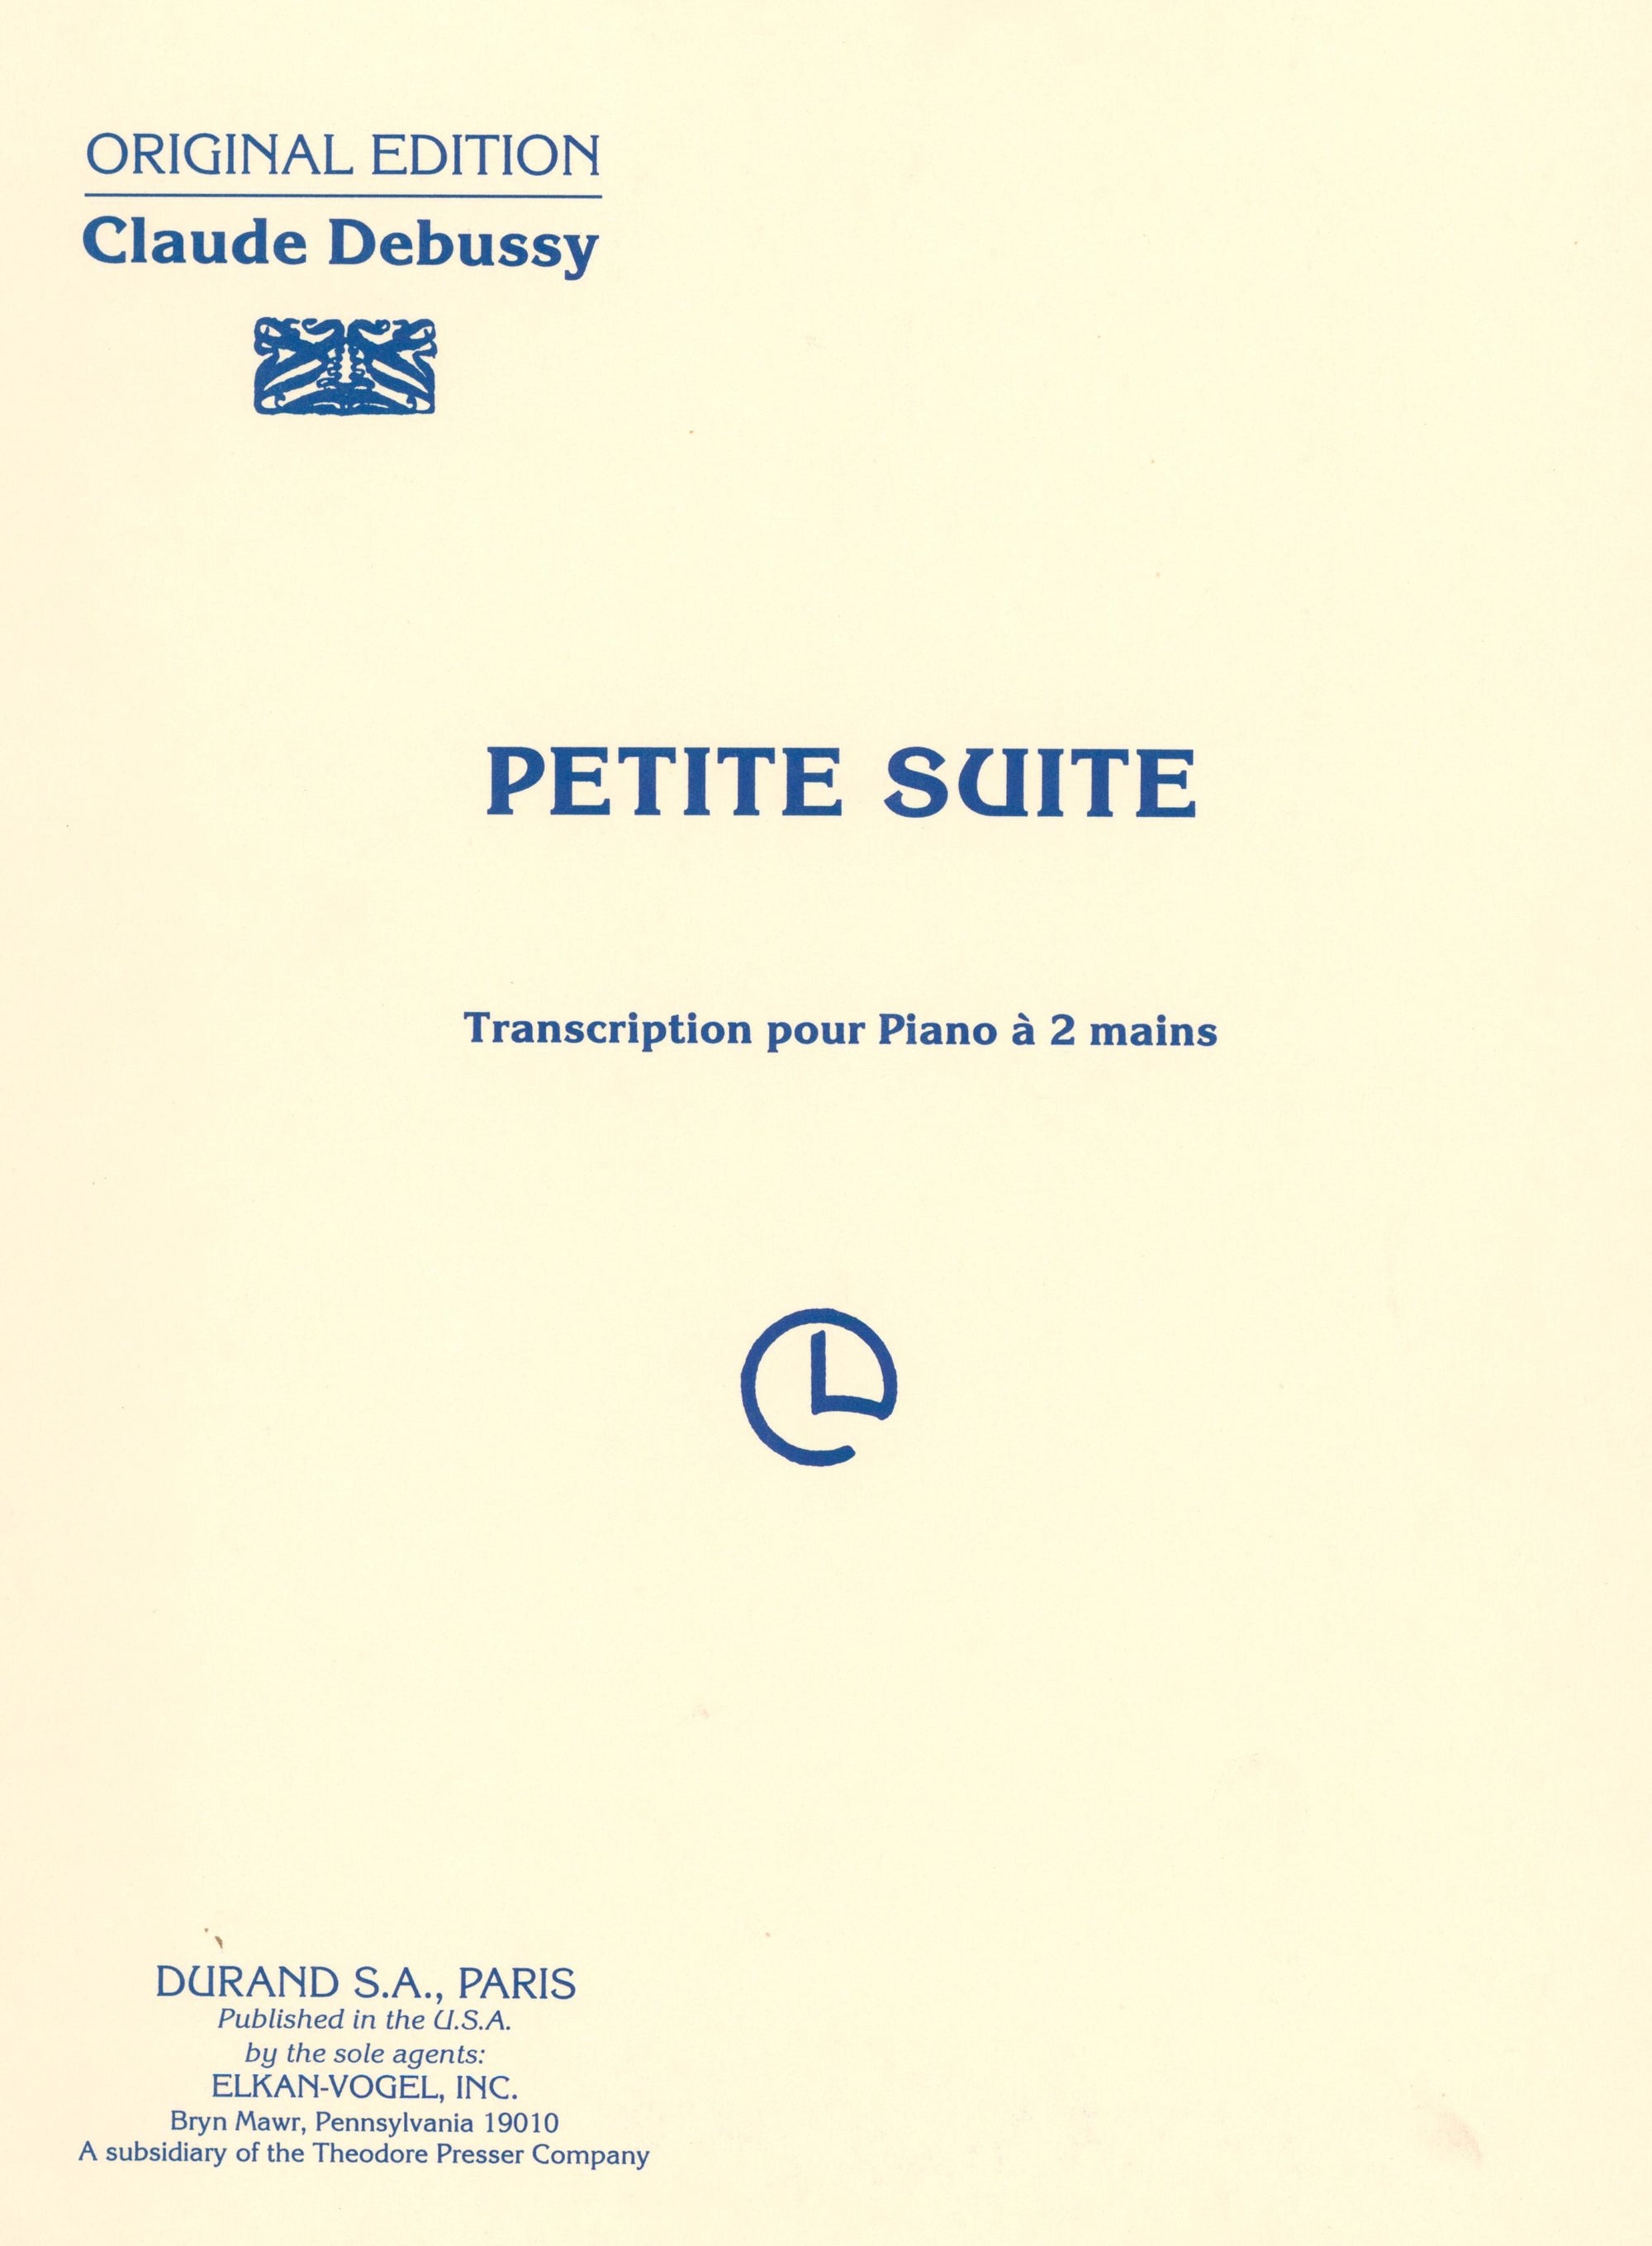 Debussy: Petite Suite (transc. for solo piano)